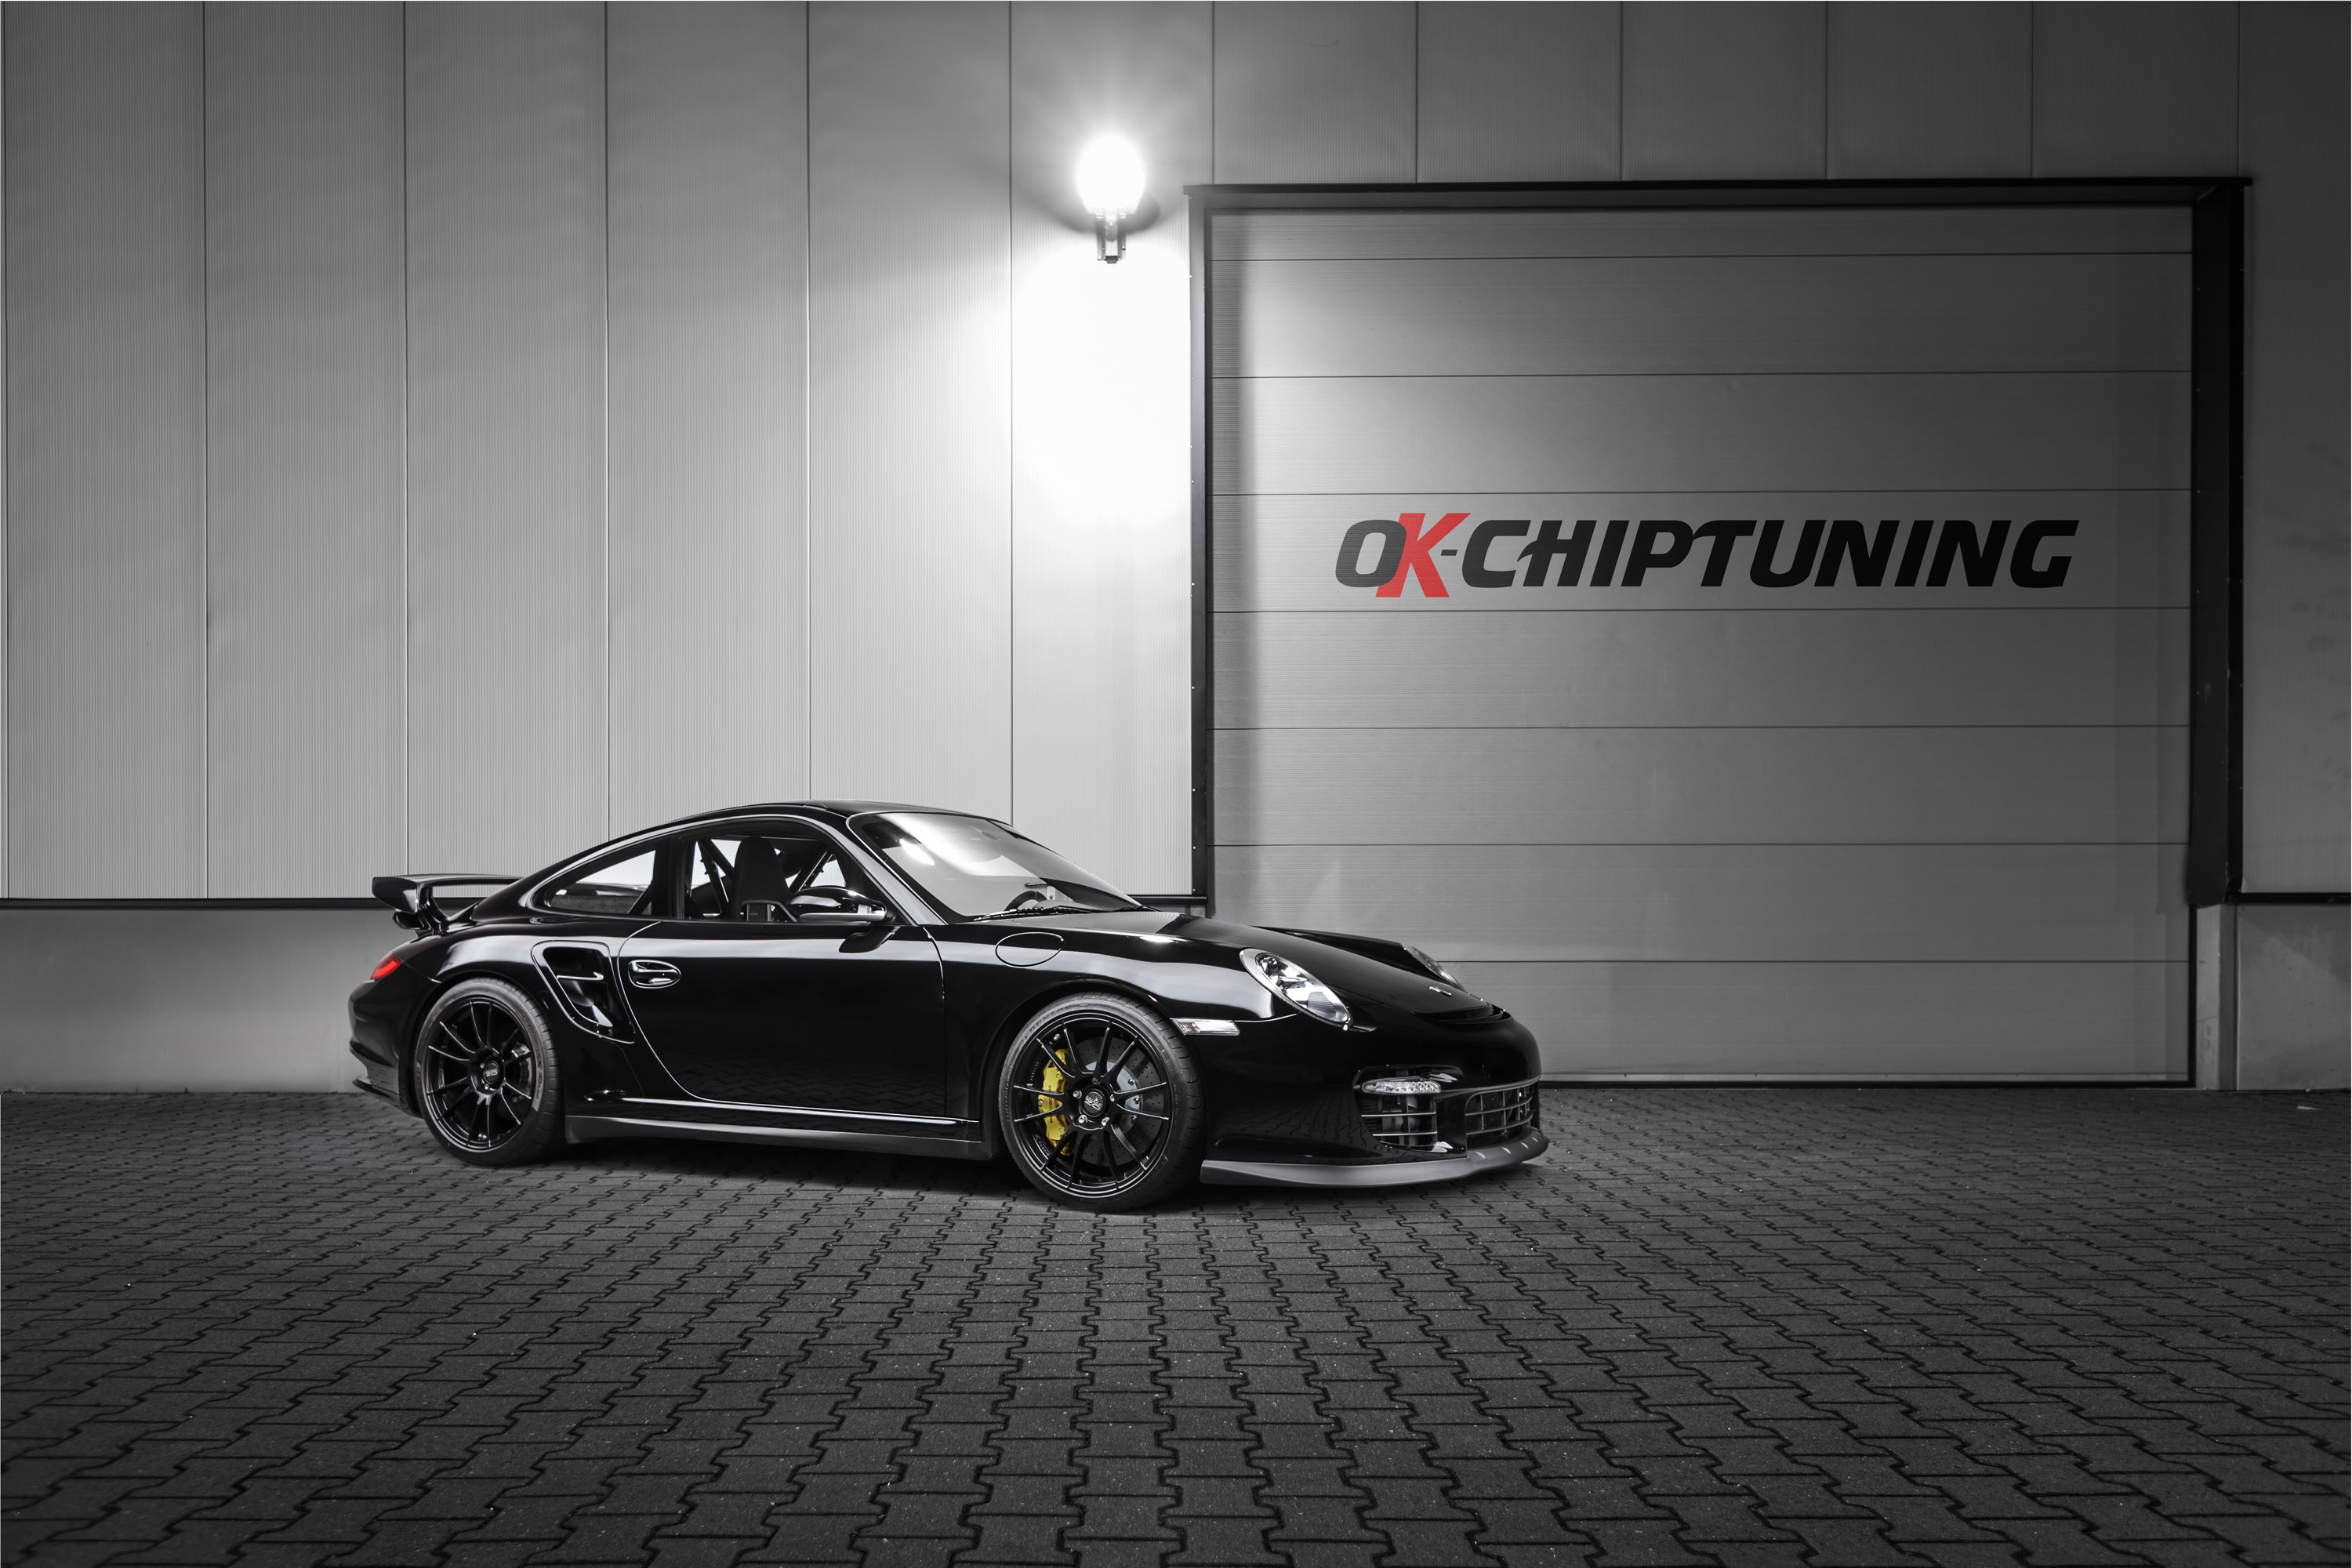 OK-Chiptuning Porsche 997 GT2 RS photo #1